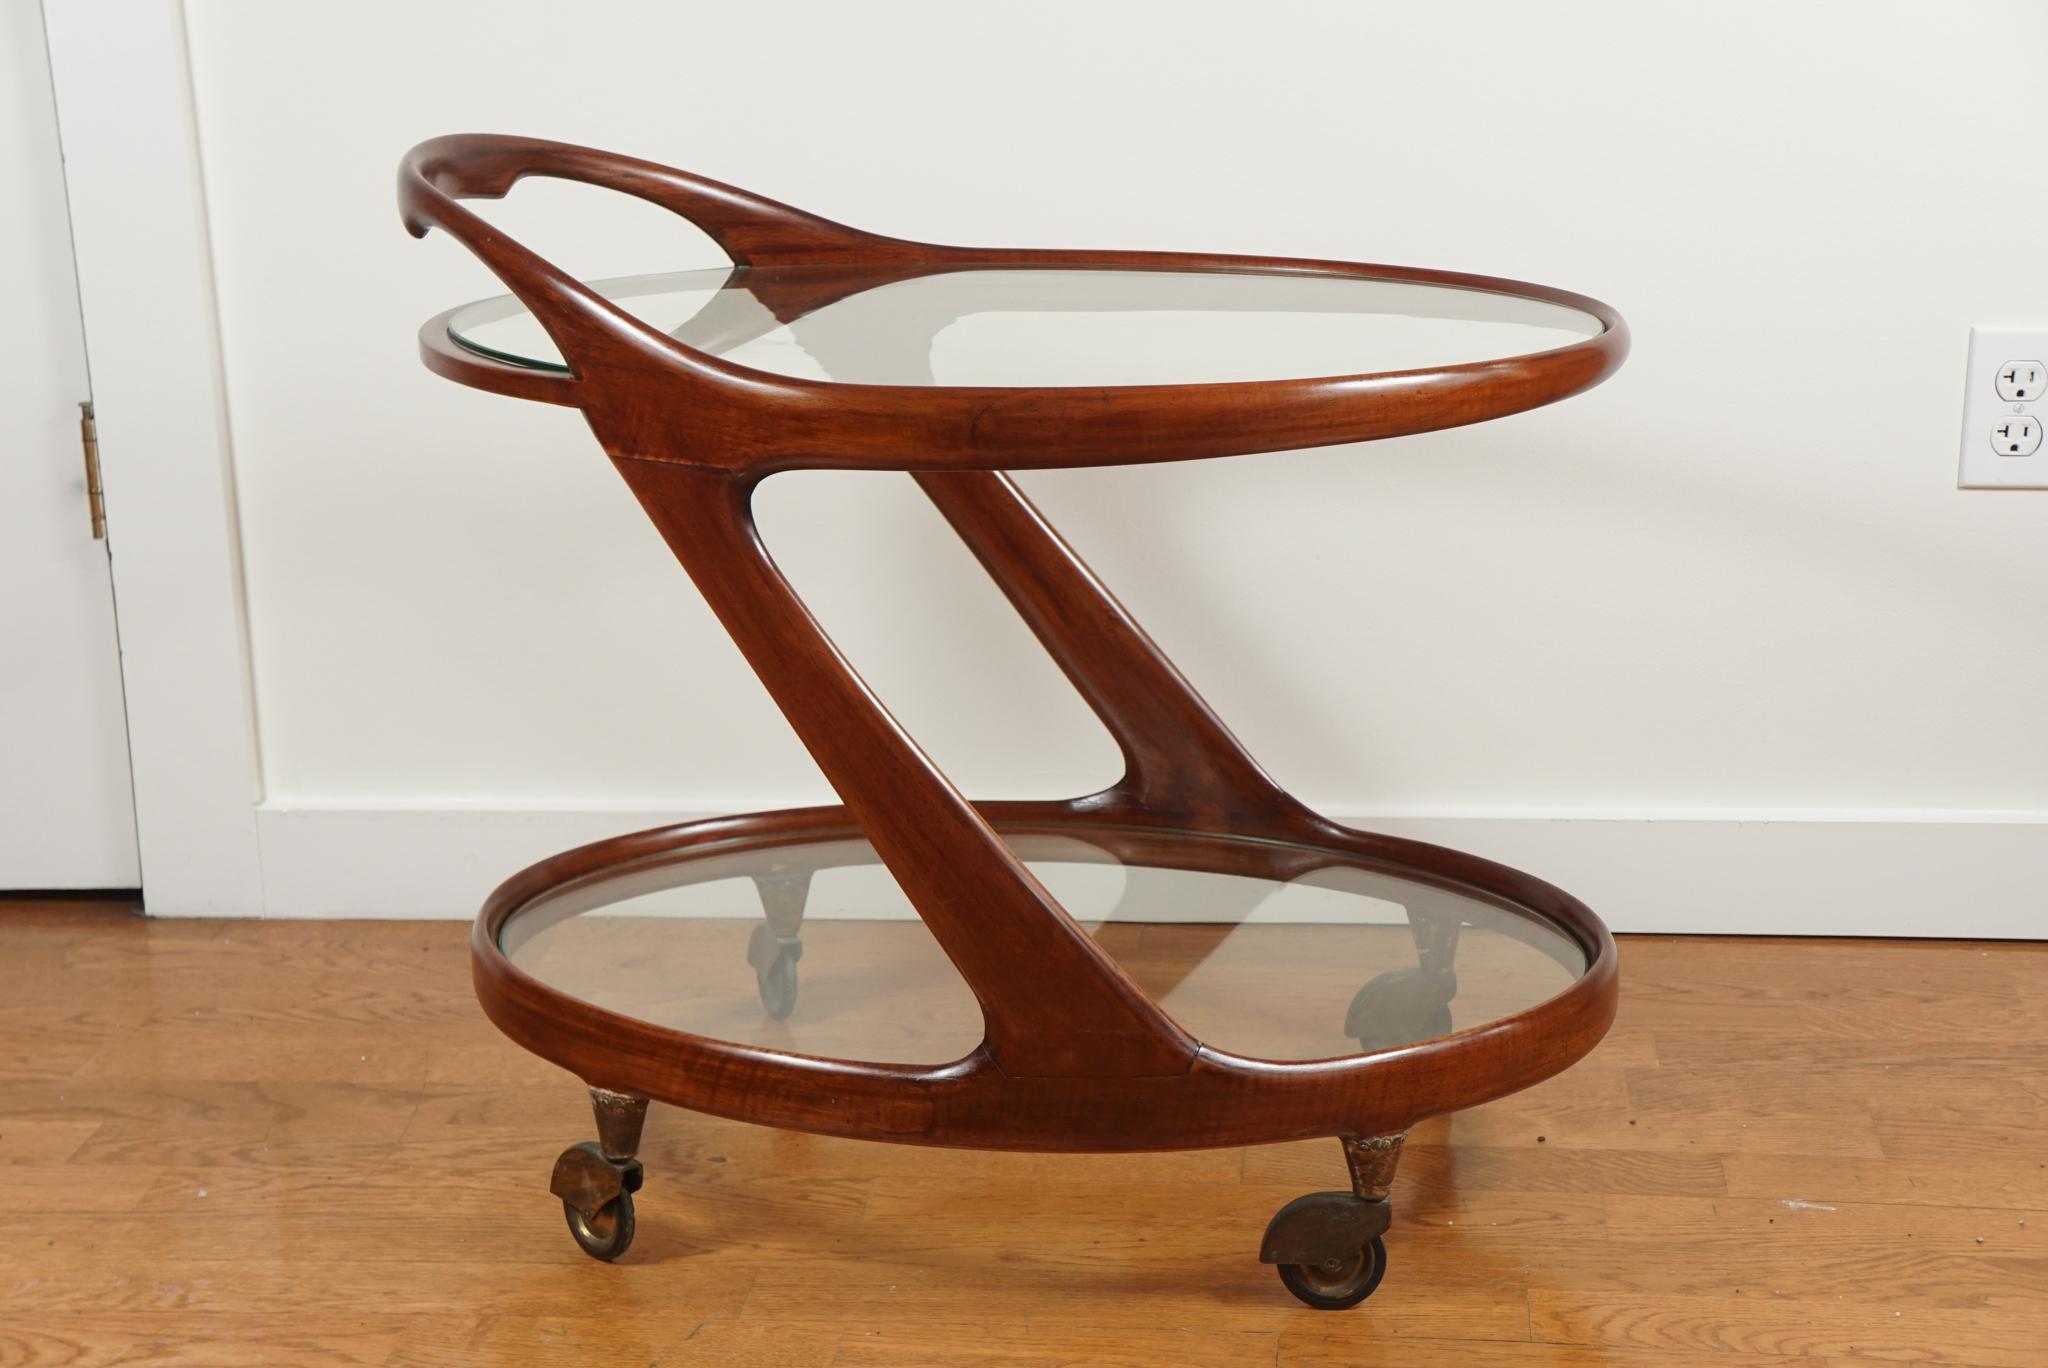 Italy, circa 1955
A graceful, oval shaped bar cart in mahogany and glass by designer, Paola Buffa.